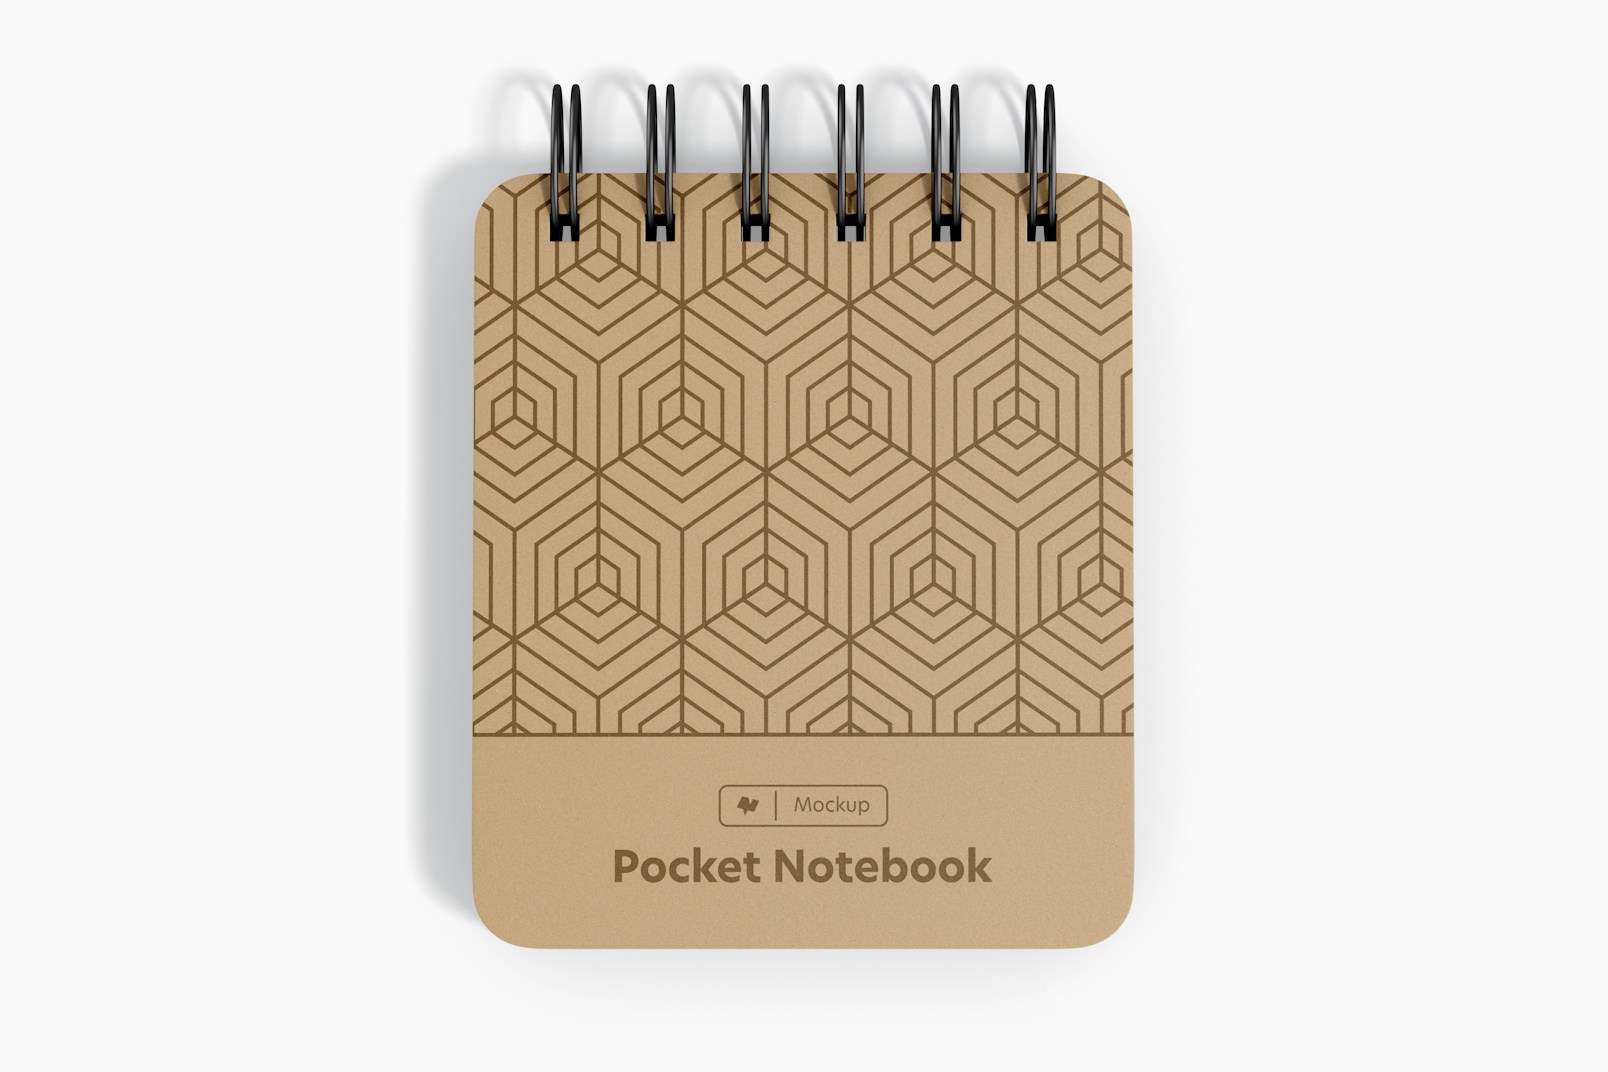 Pocket Notebook Mockup